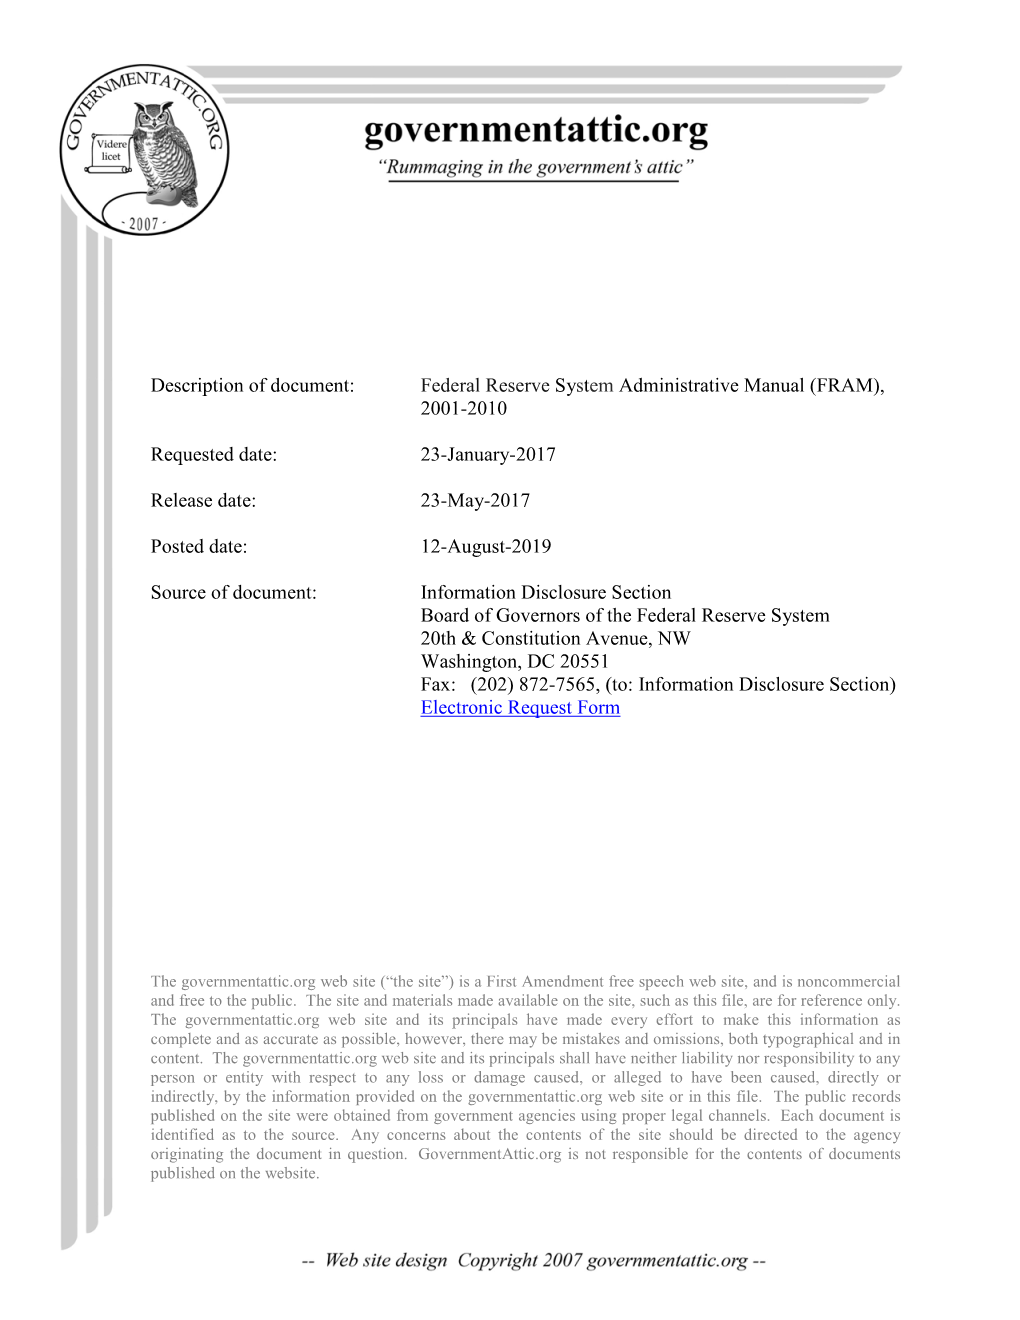 Federal Reserve System Administrative Manual (FRAM), 2001-2010